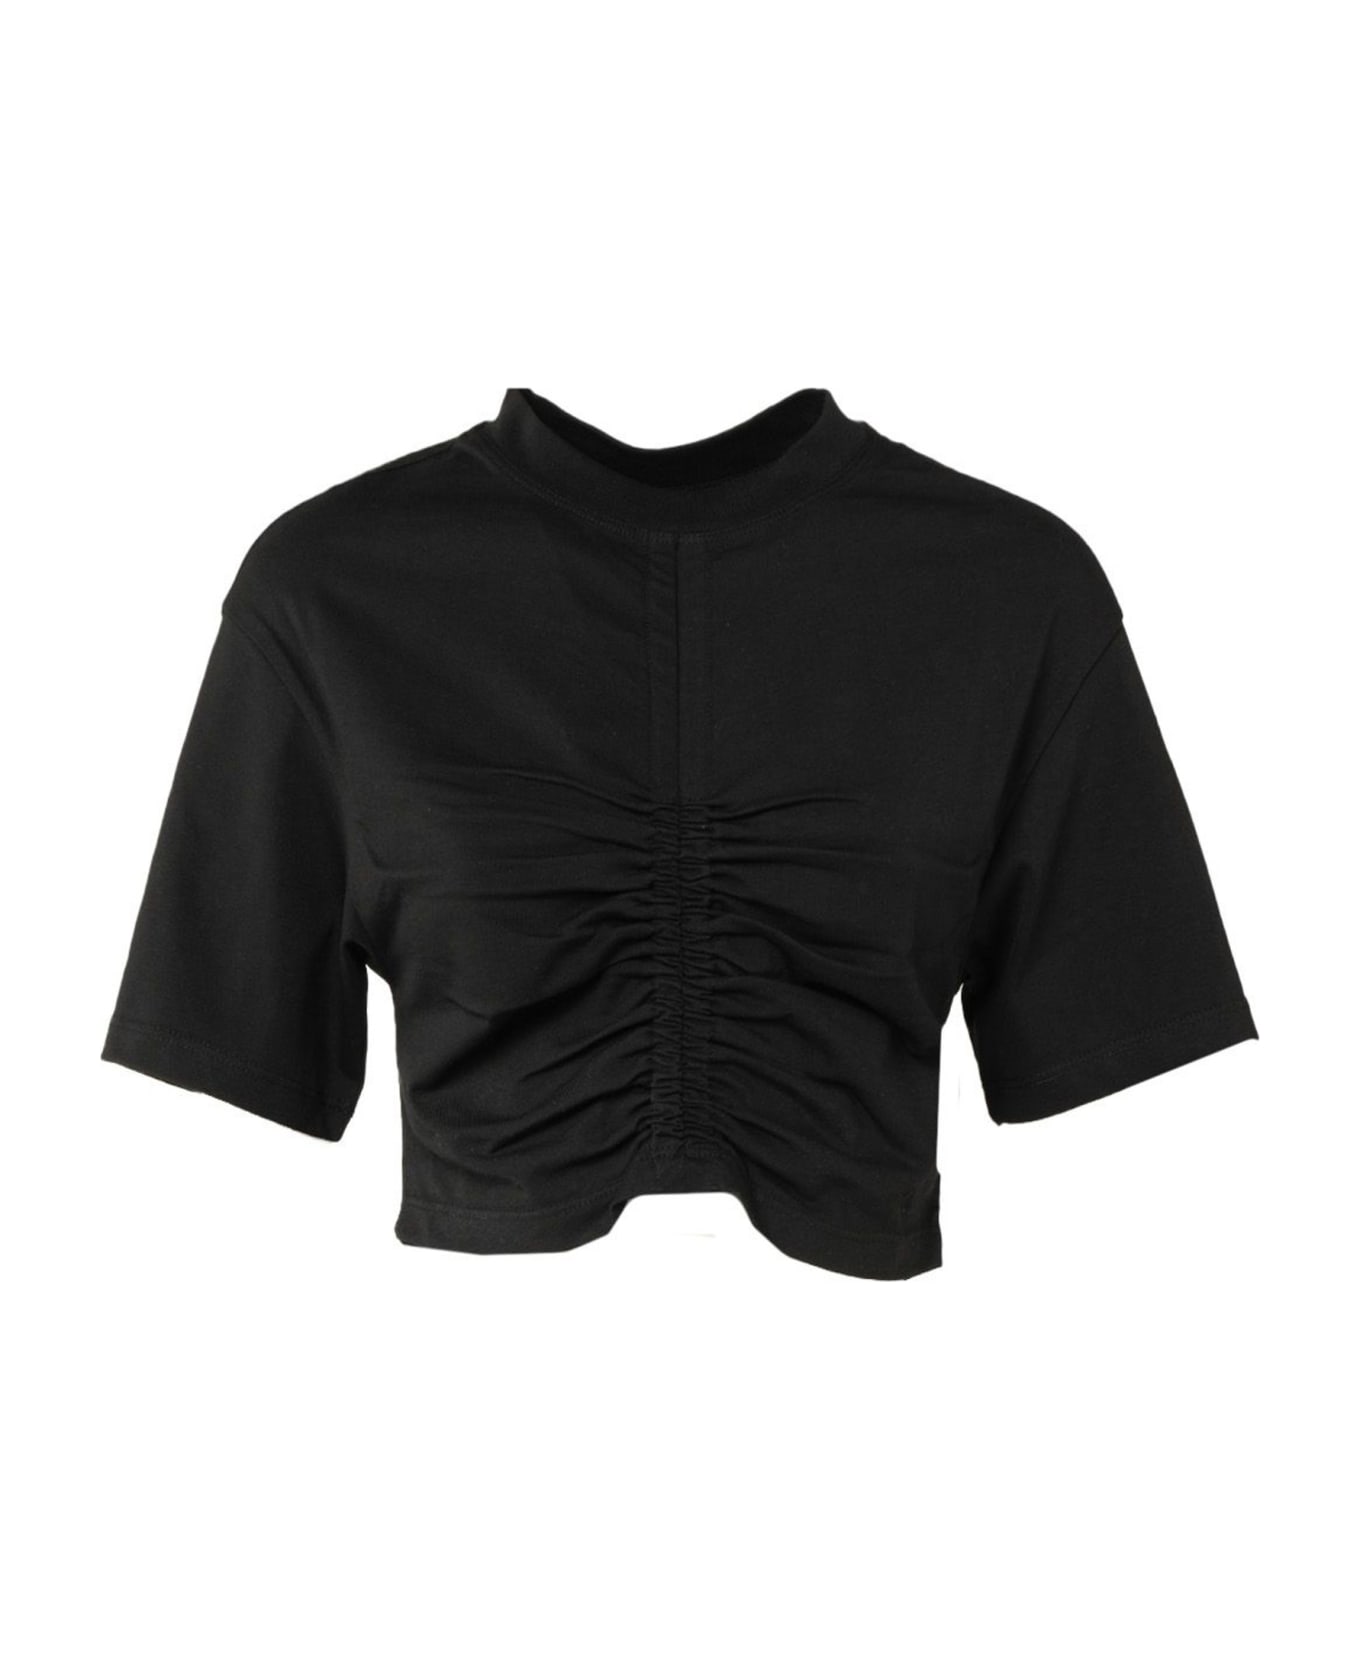 SEMICOUTURE Black Cotton T-shirt - Black